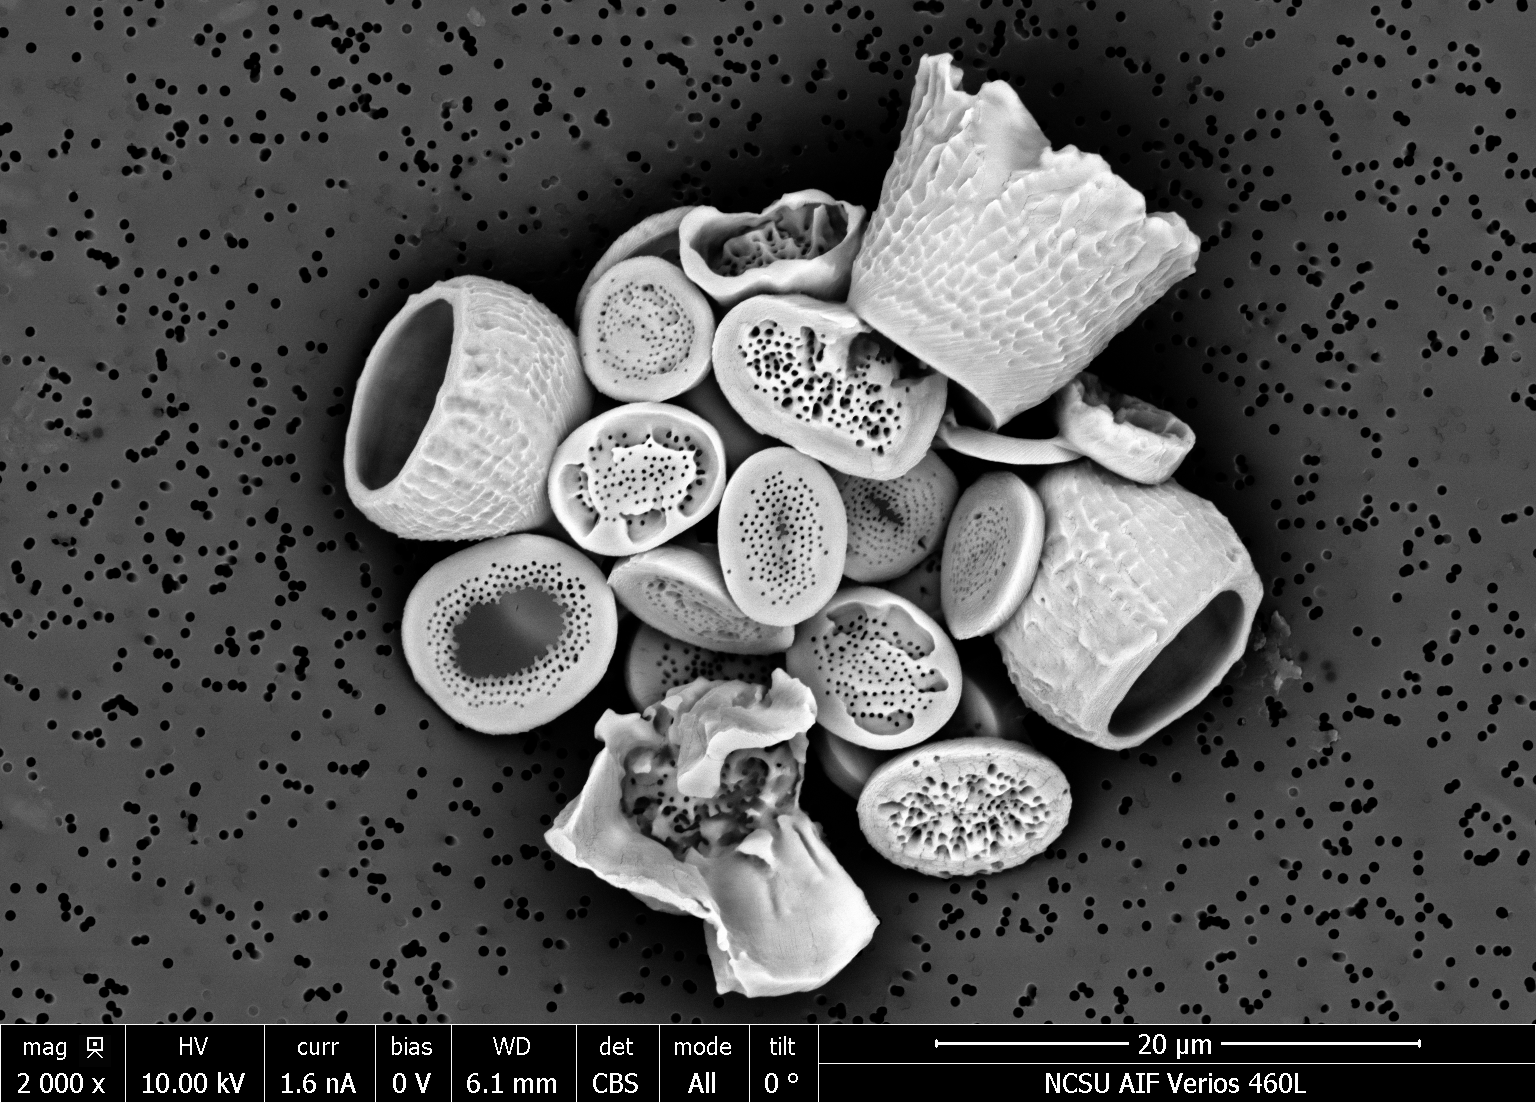 malformed morphology of coccolithophore (single-celled algae) S. apsteinii